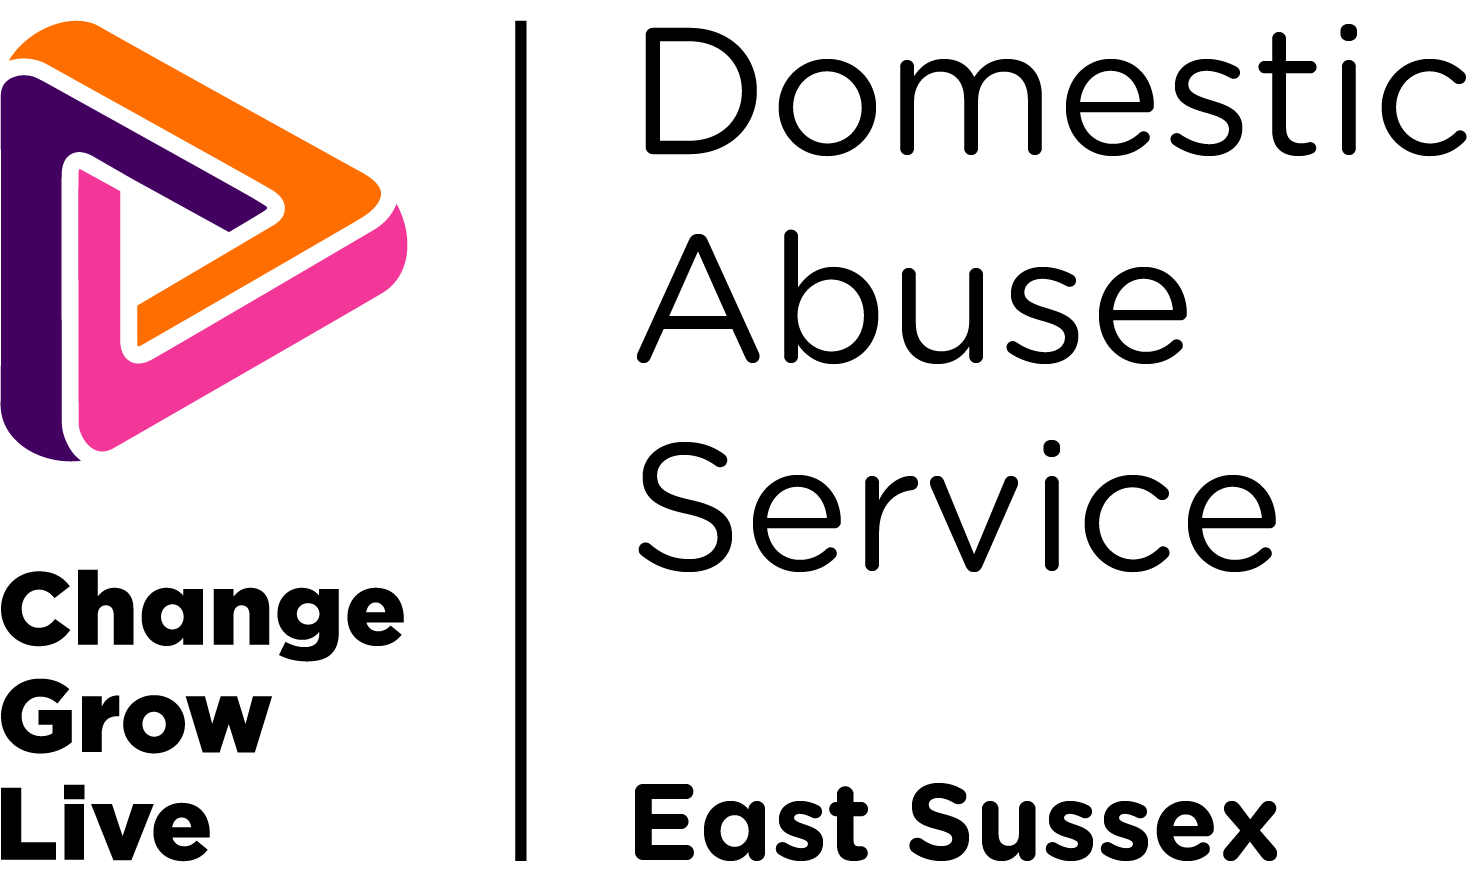 The Domestic Abuse Service logo in colour